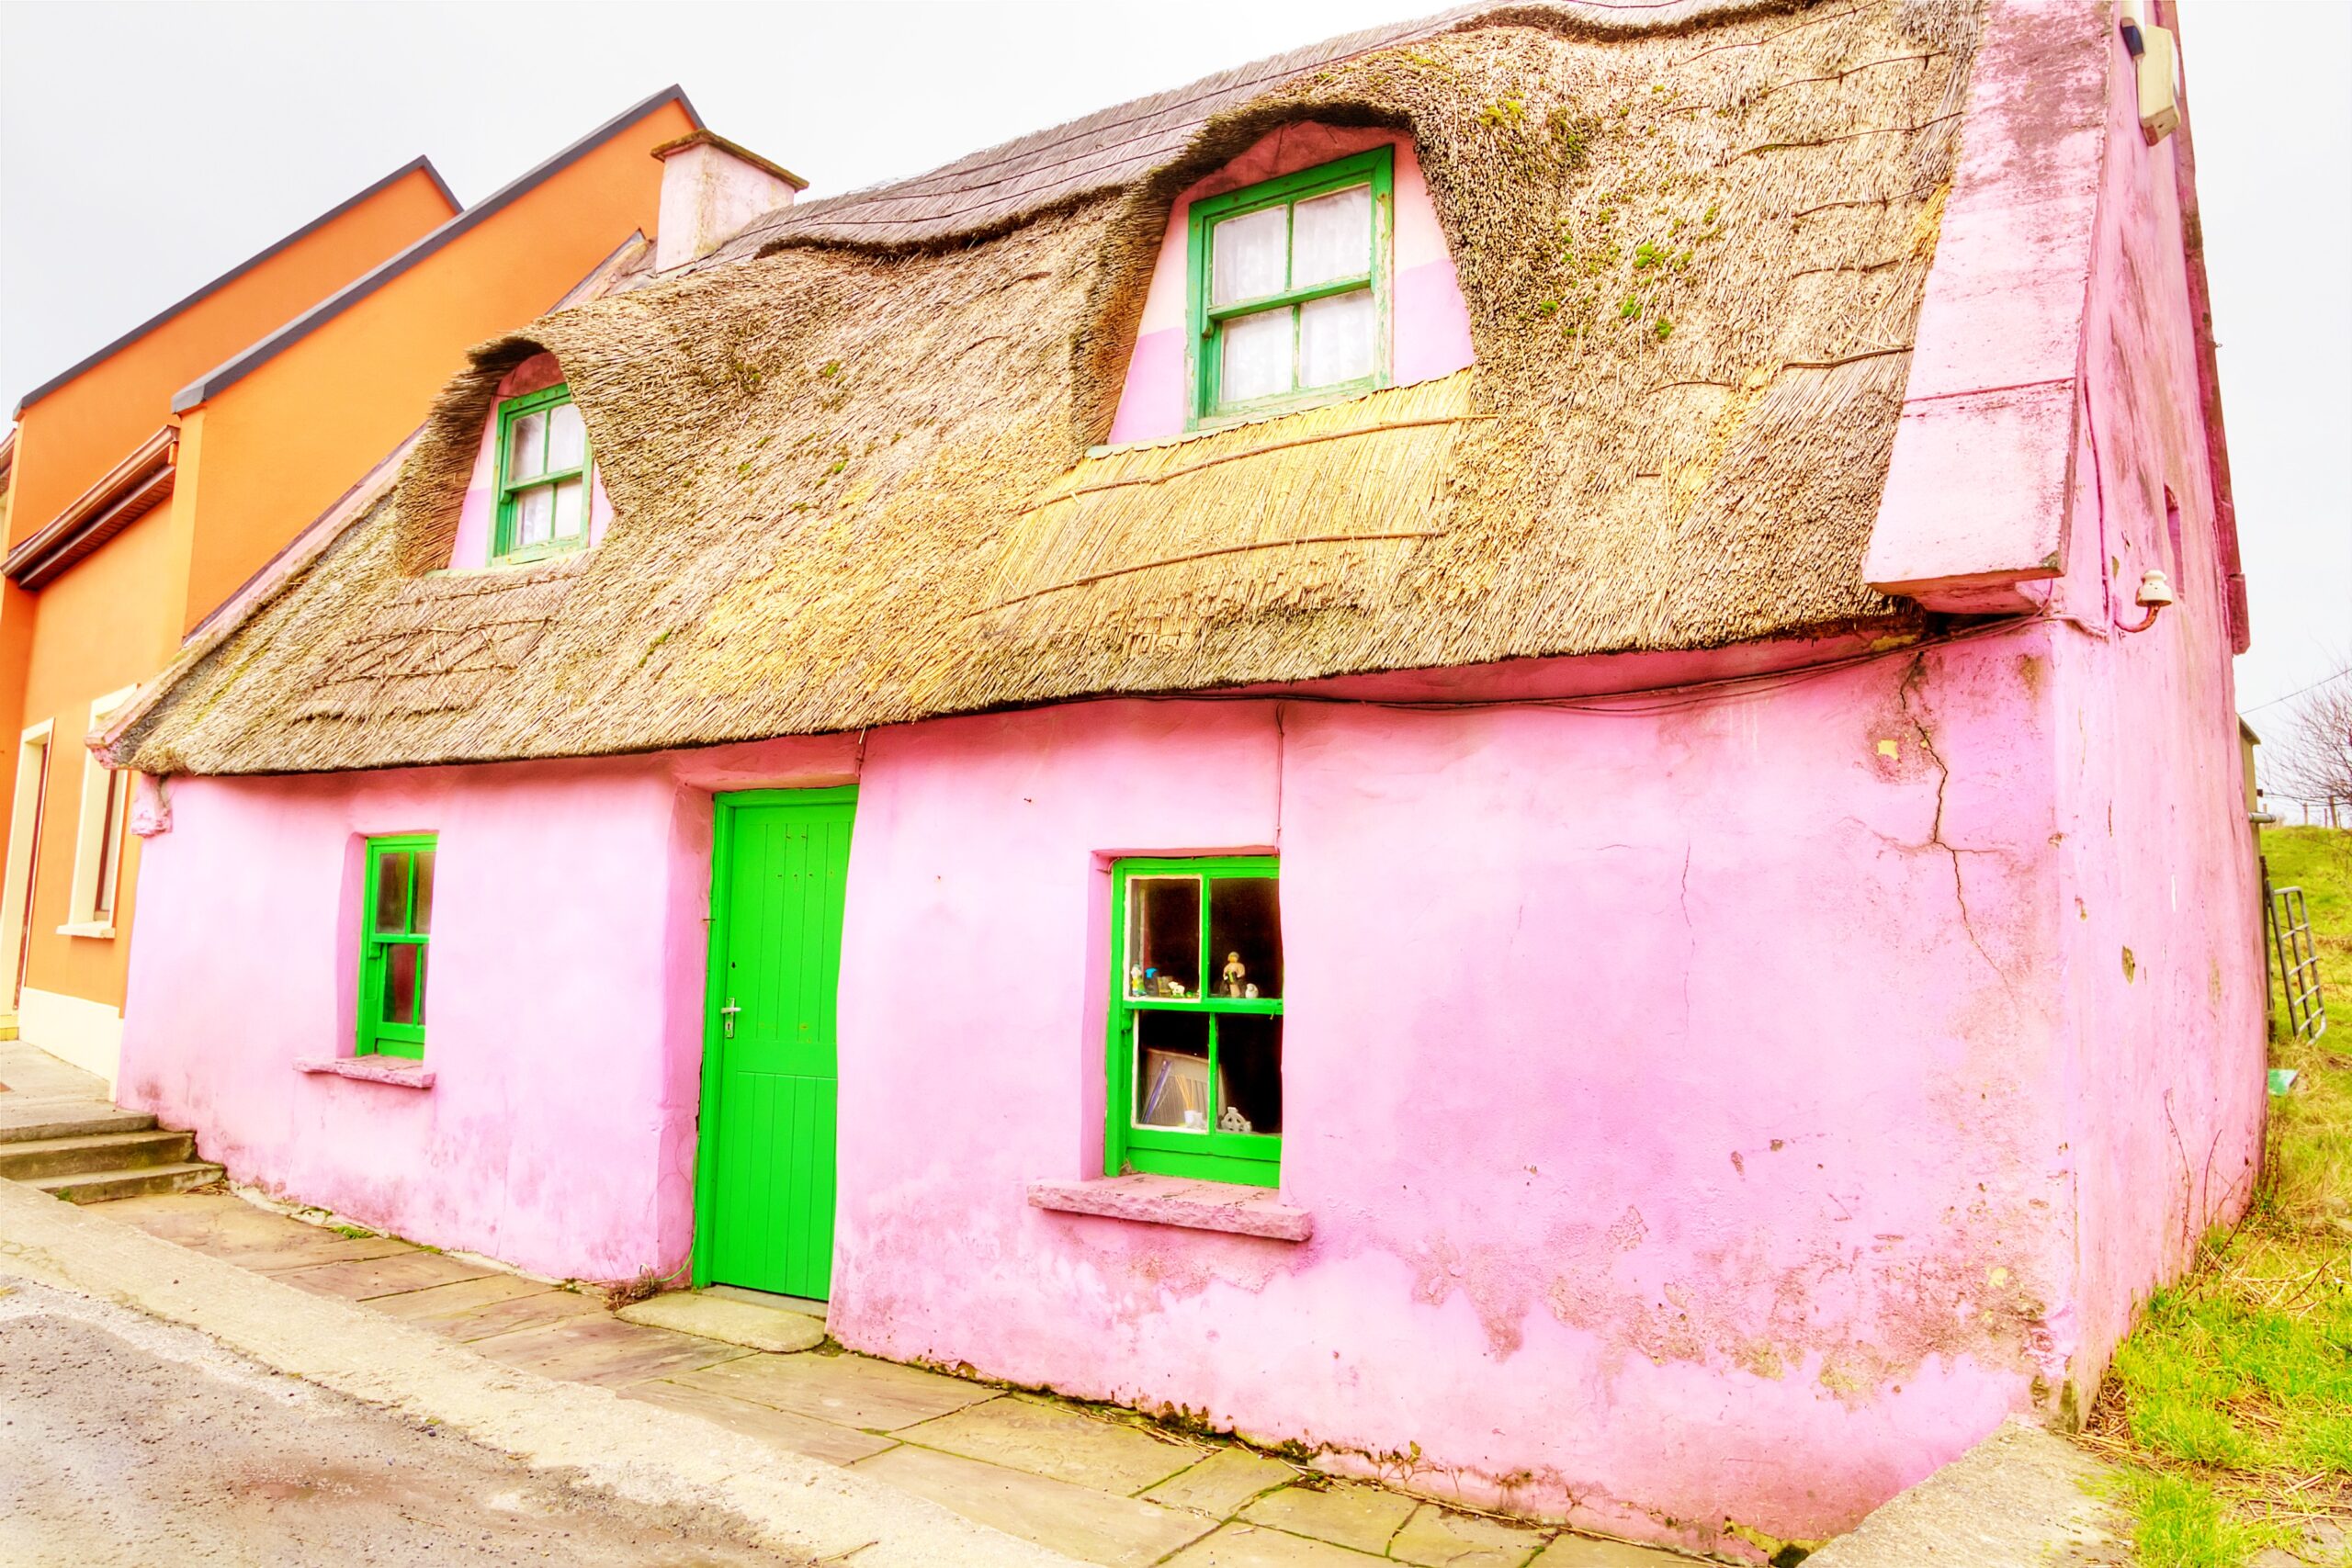 <img src="pink.jpg" alt="pink and green cottage ireland"/>